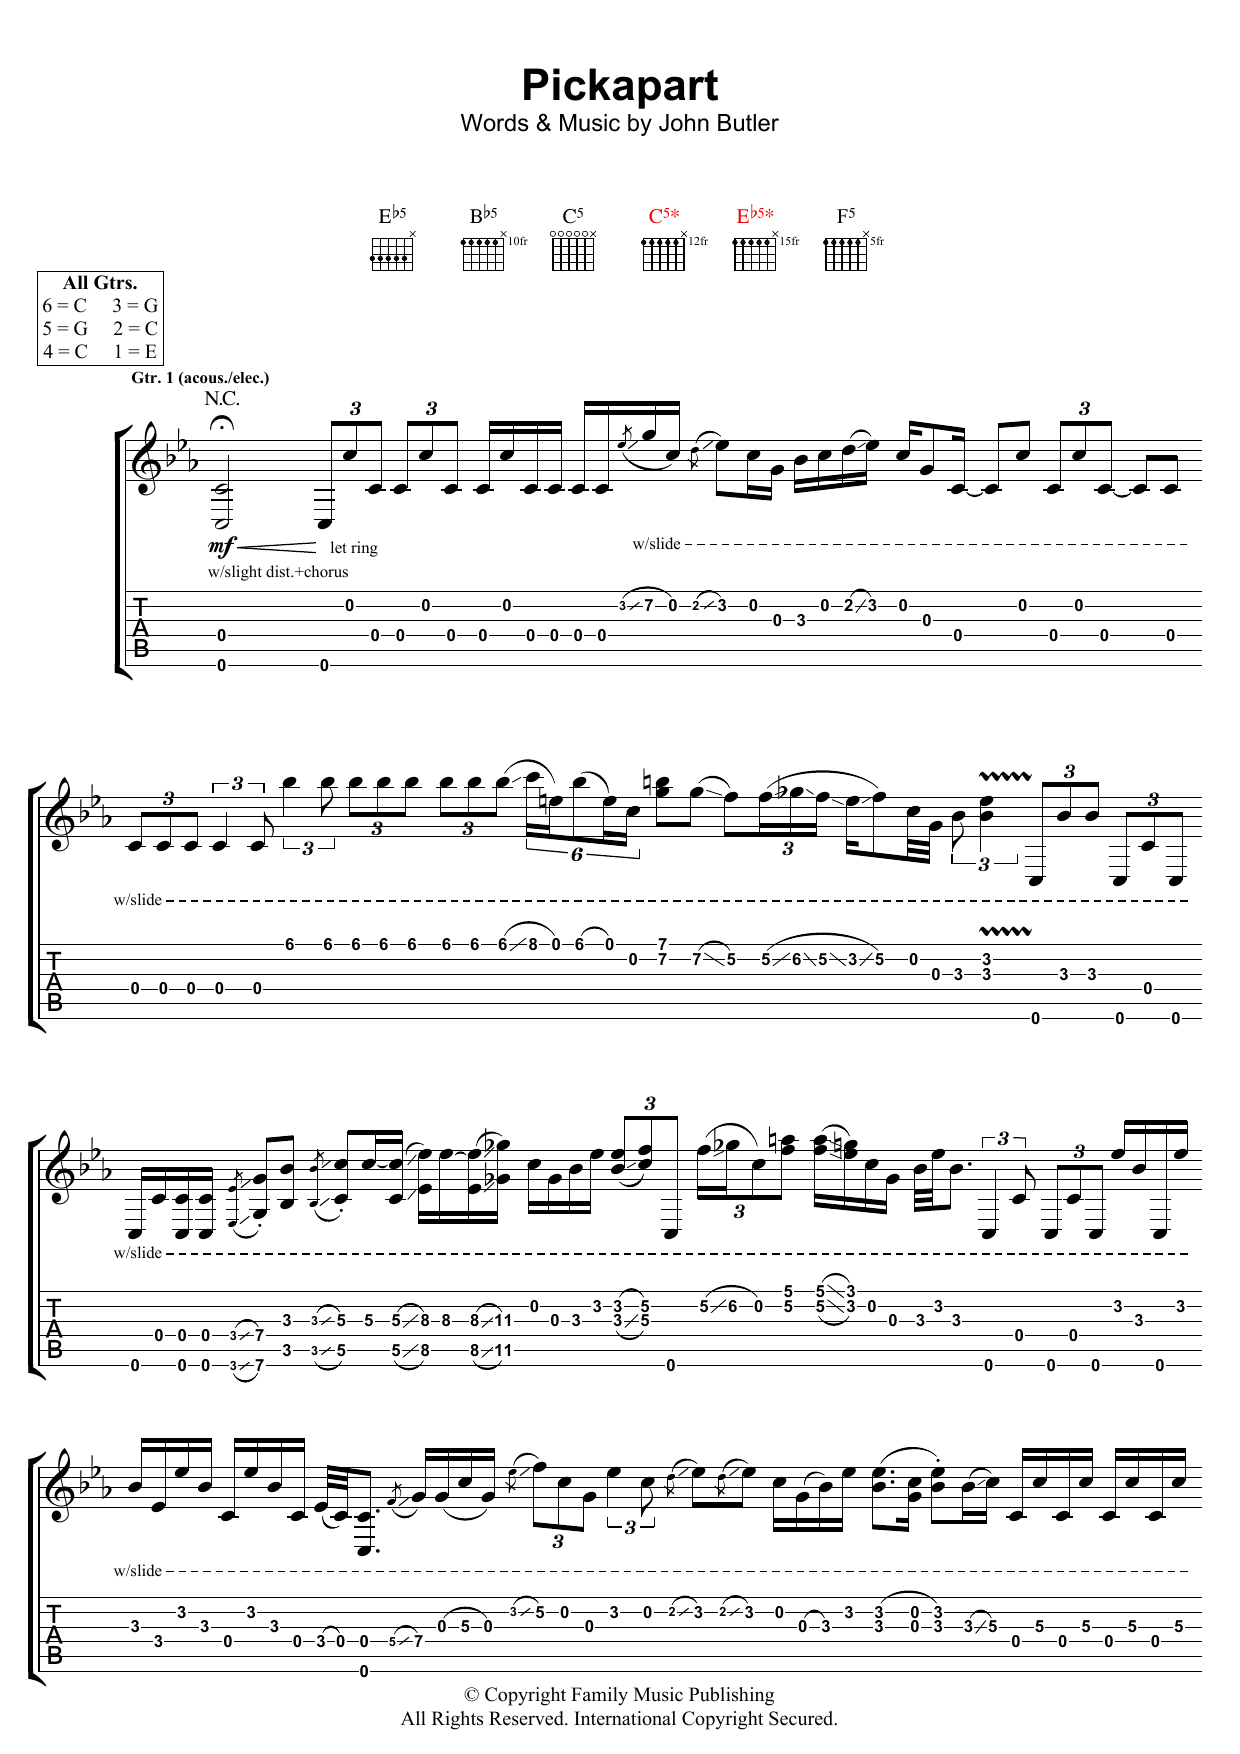 John Butler Pickapart Sheet Music Notes & Chords for Guitar Tab - Download or Print PDF